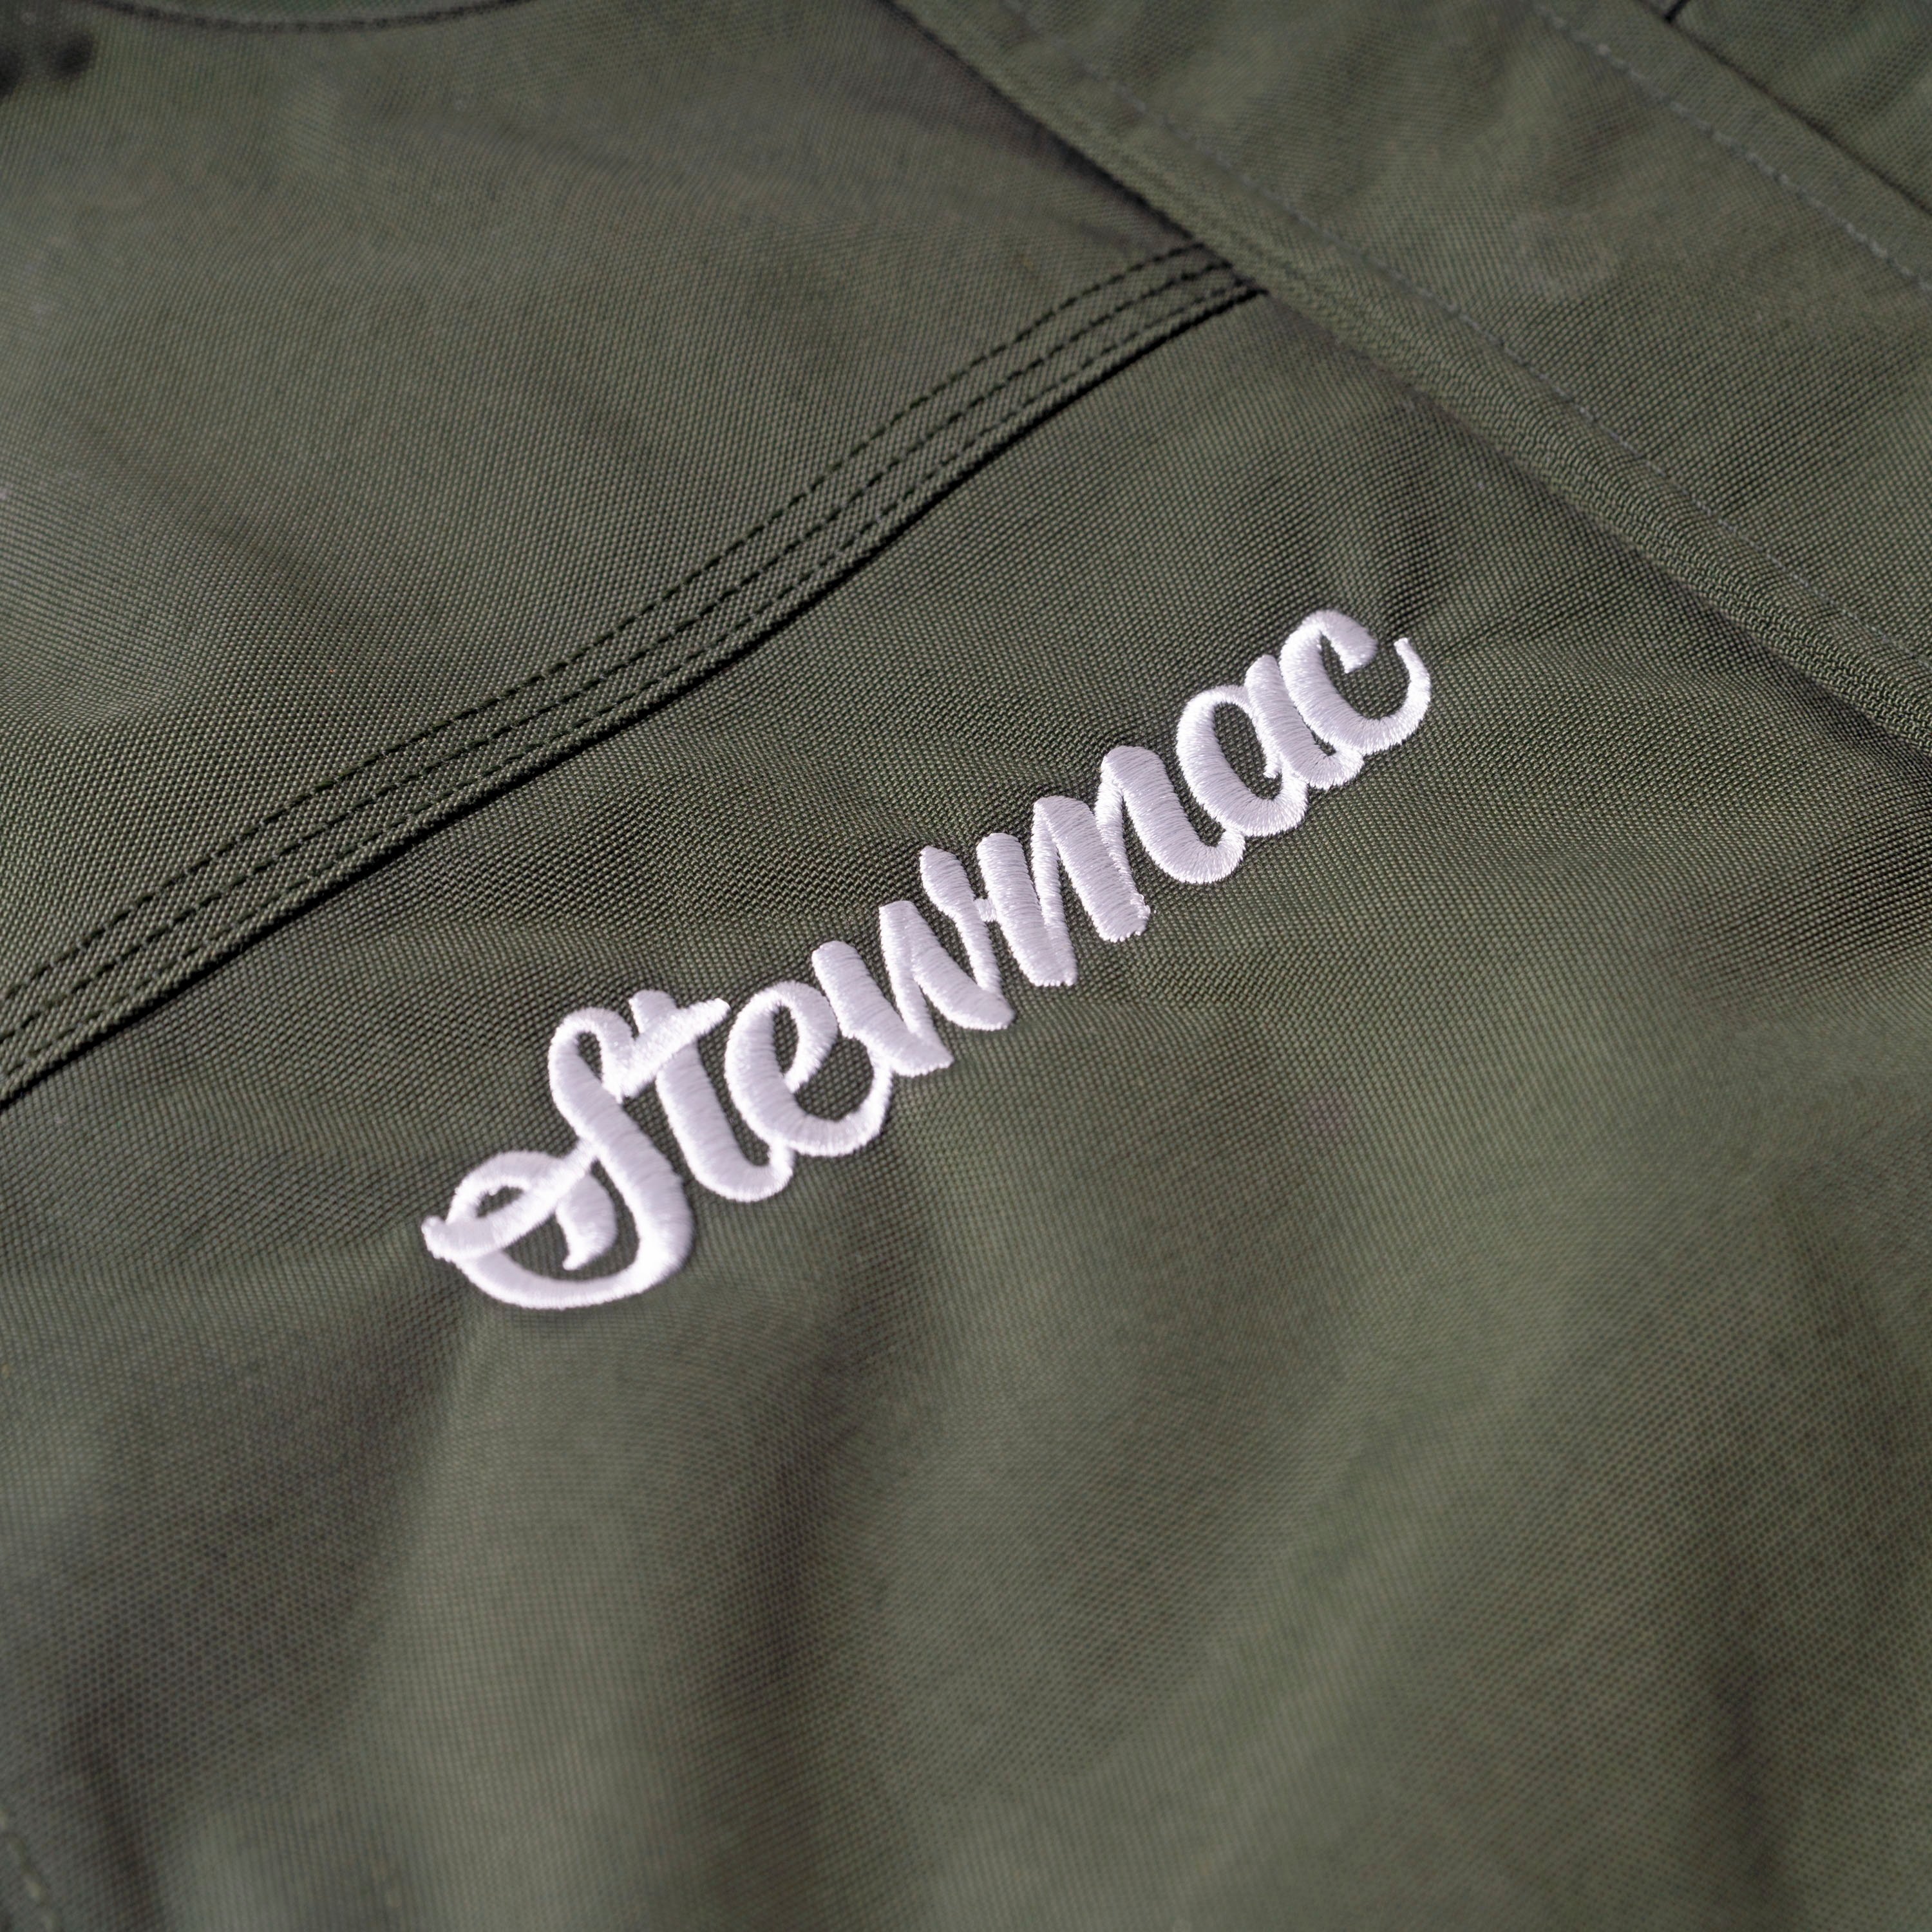 StewMac Jacket by Carhartt